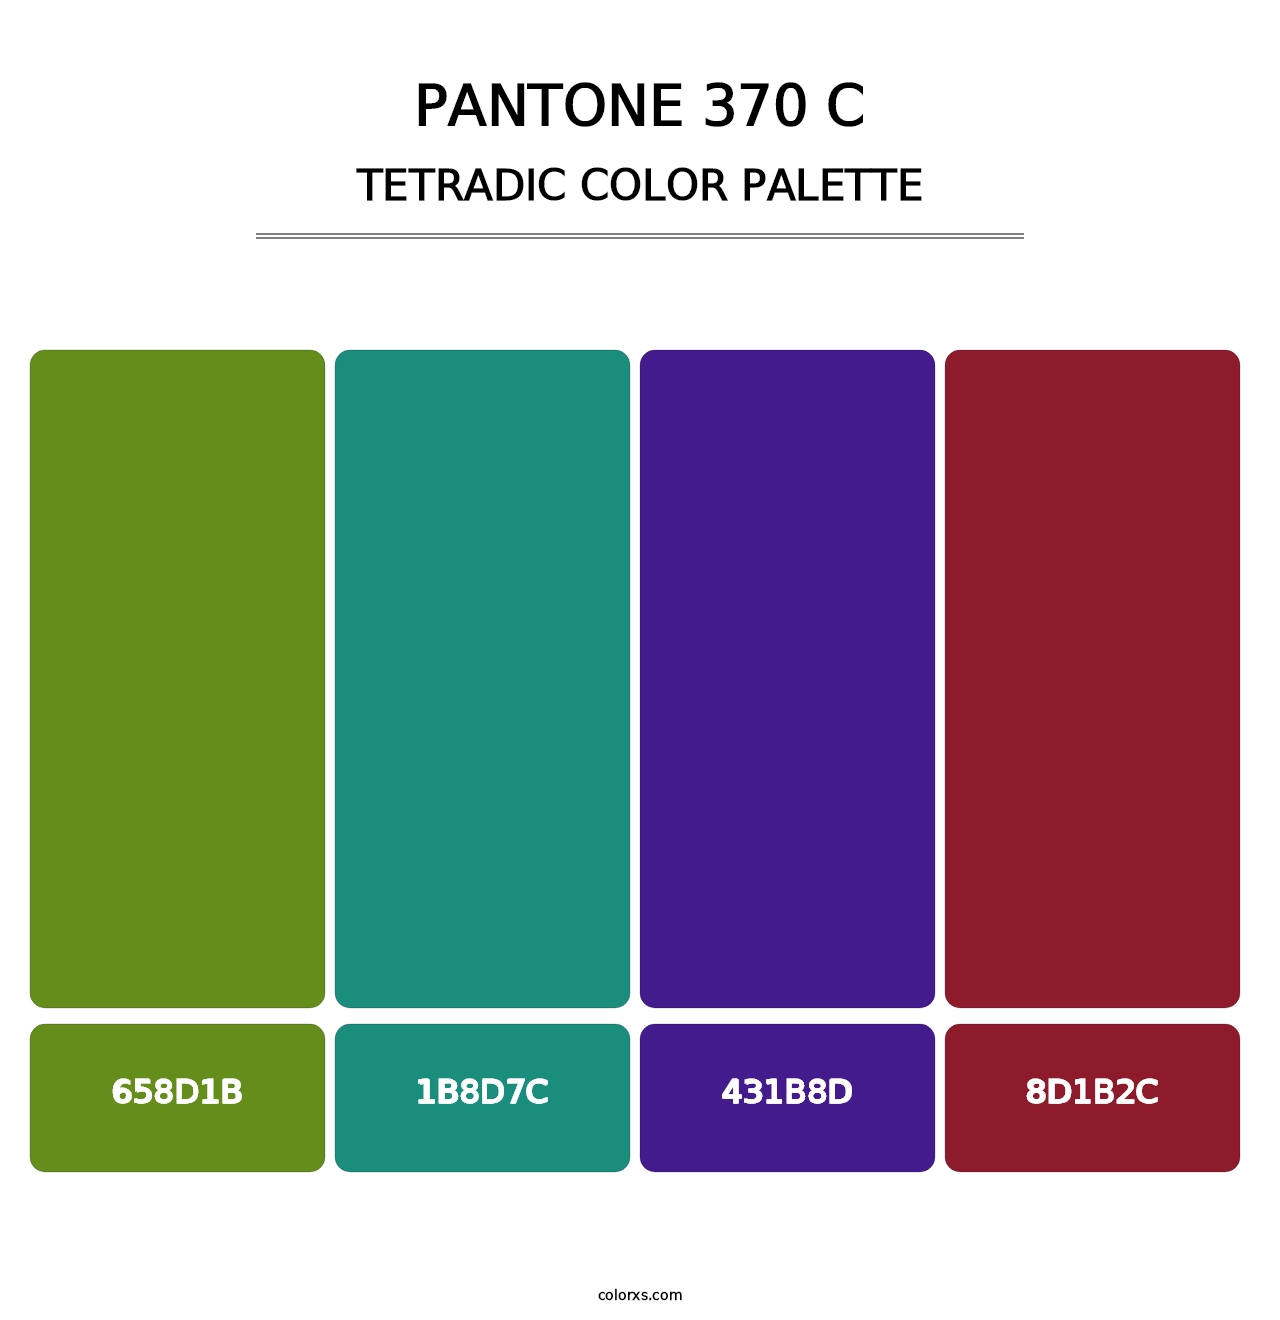 PANTONE 370 C - Tetradic Color Palette